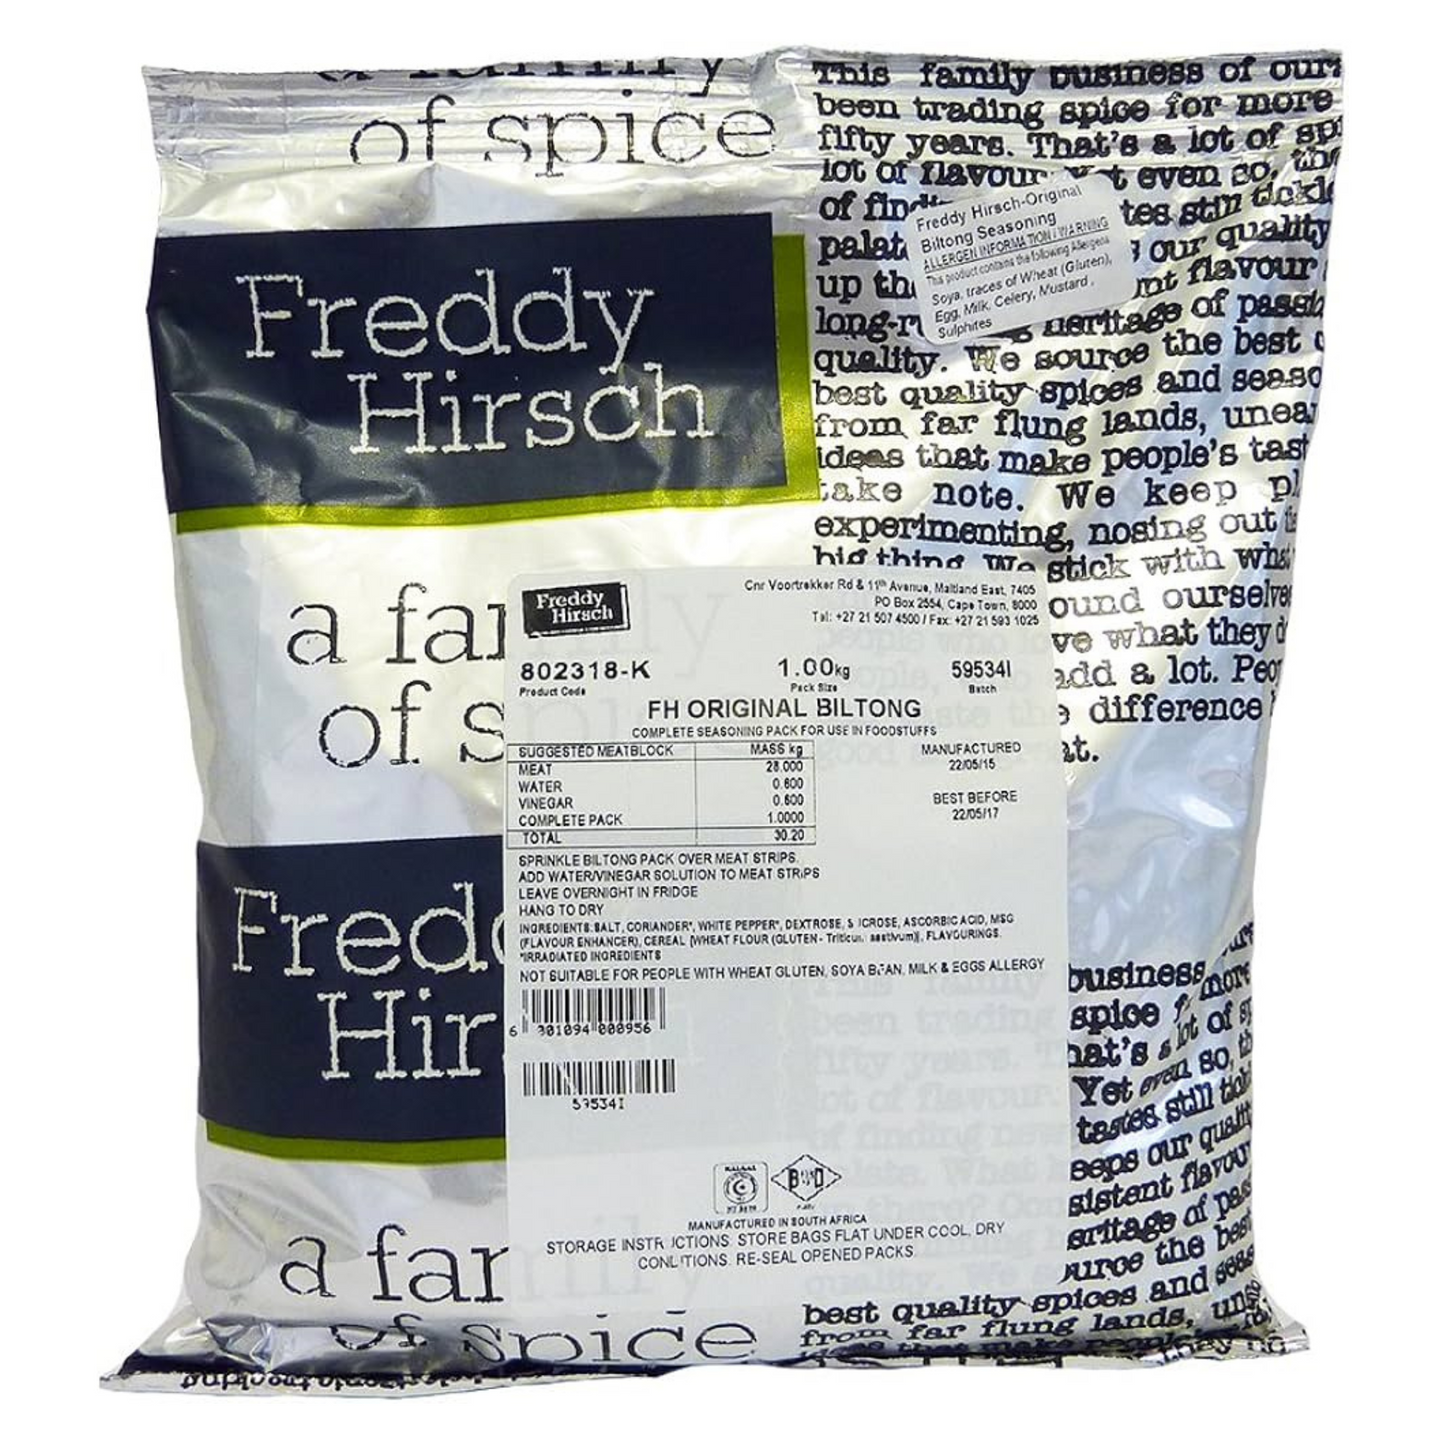 Freddy Hirsh Original Biltong Spice 1kg